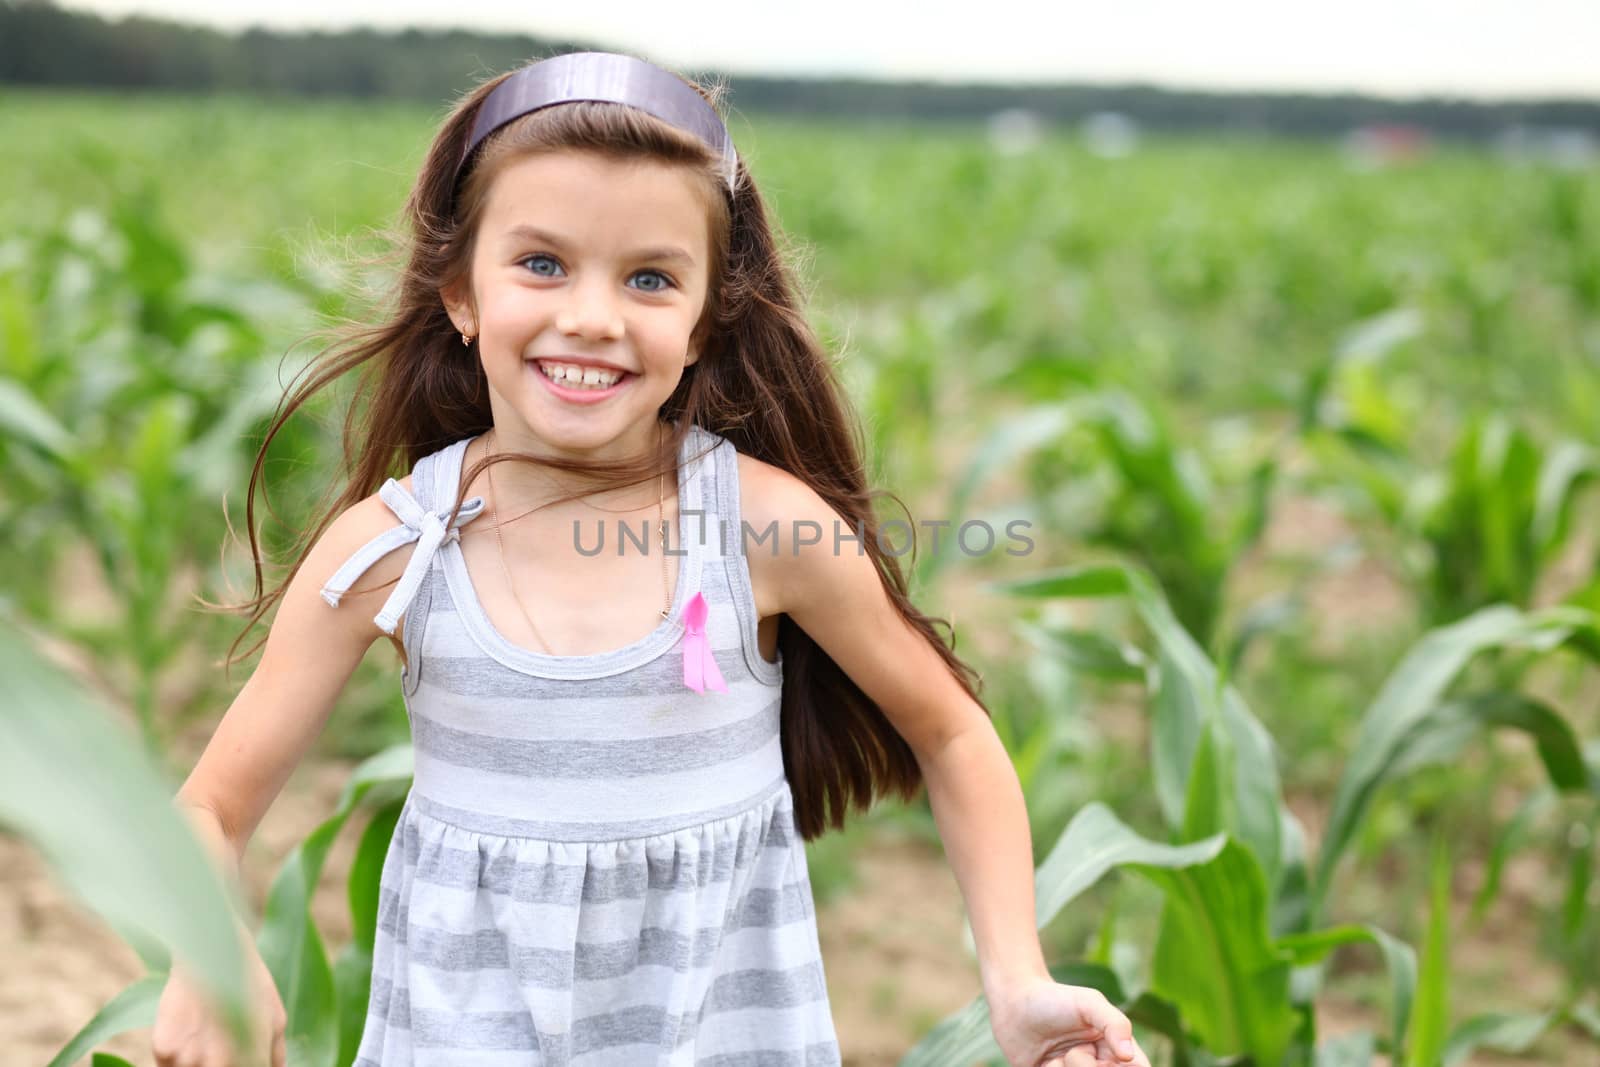 Joyful little girl running through the corn field